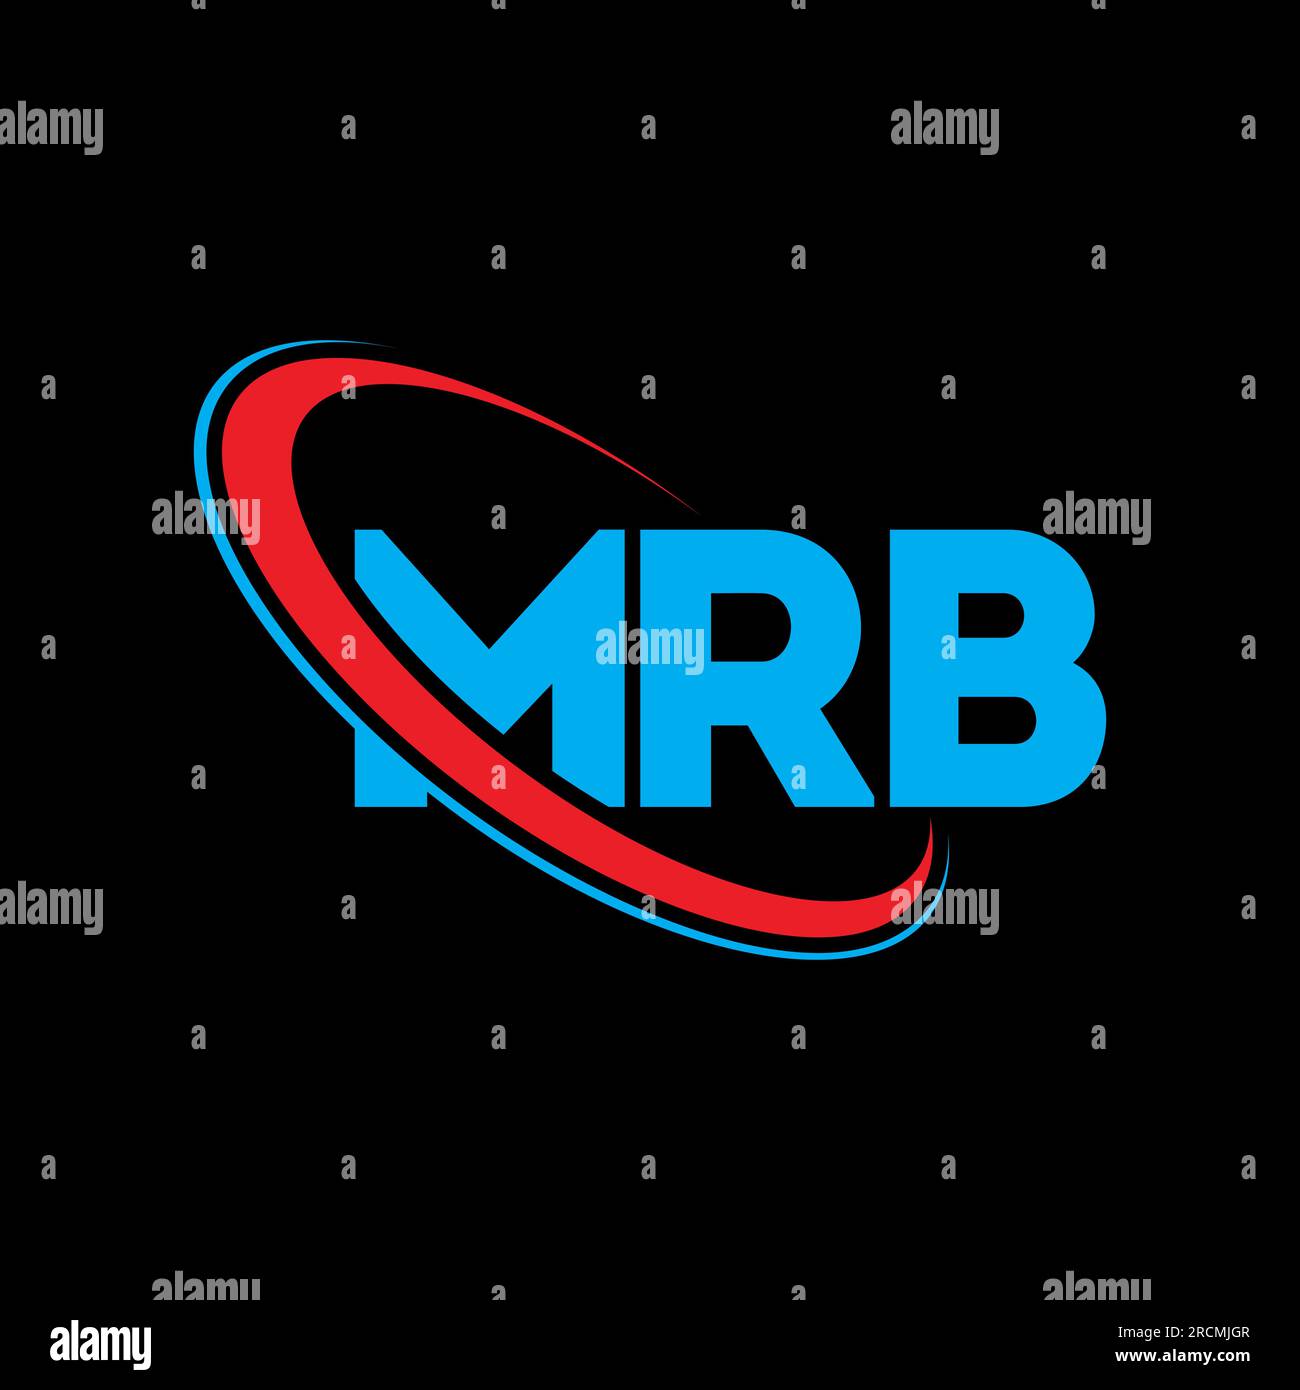 MRB logo. MRB letter. MRB letter logo design. Initials MRB logo linked with circle and uppercase monogram logo. MRB typography for technology, busines Stock Vector